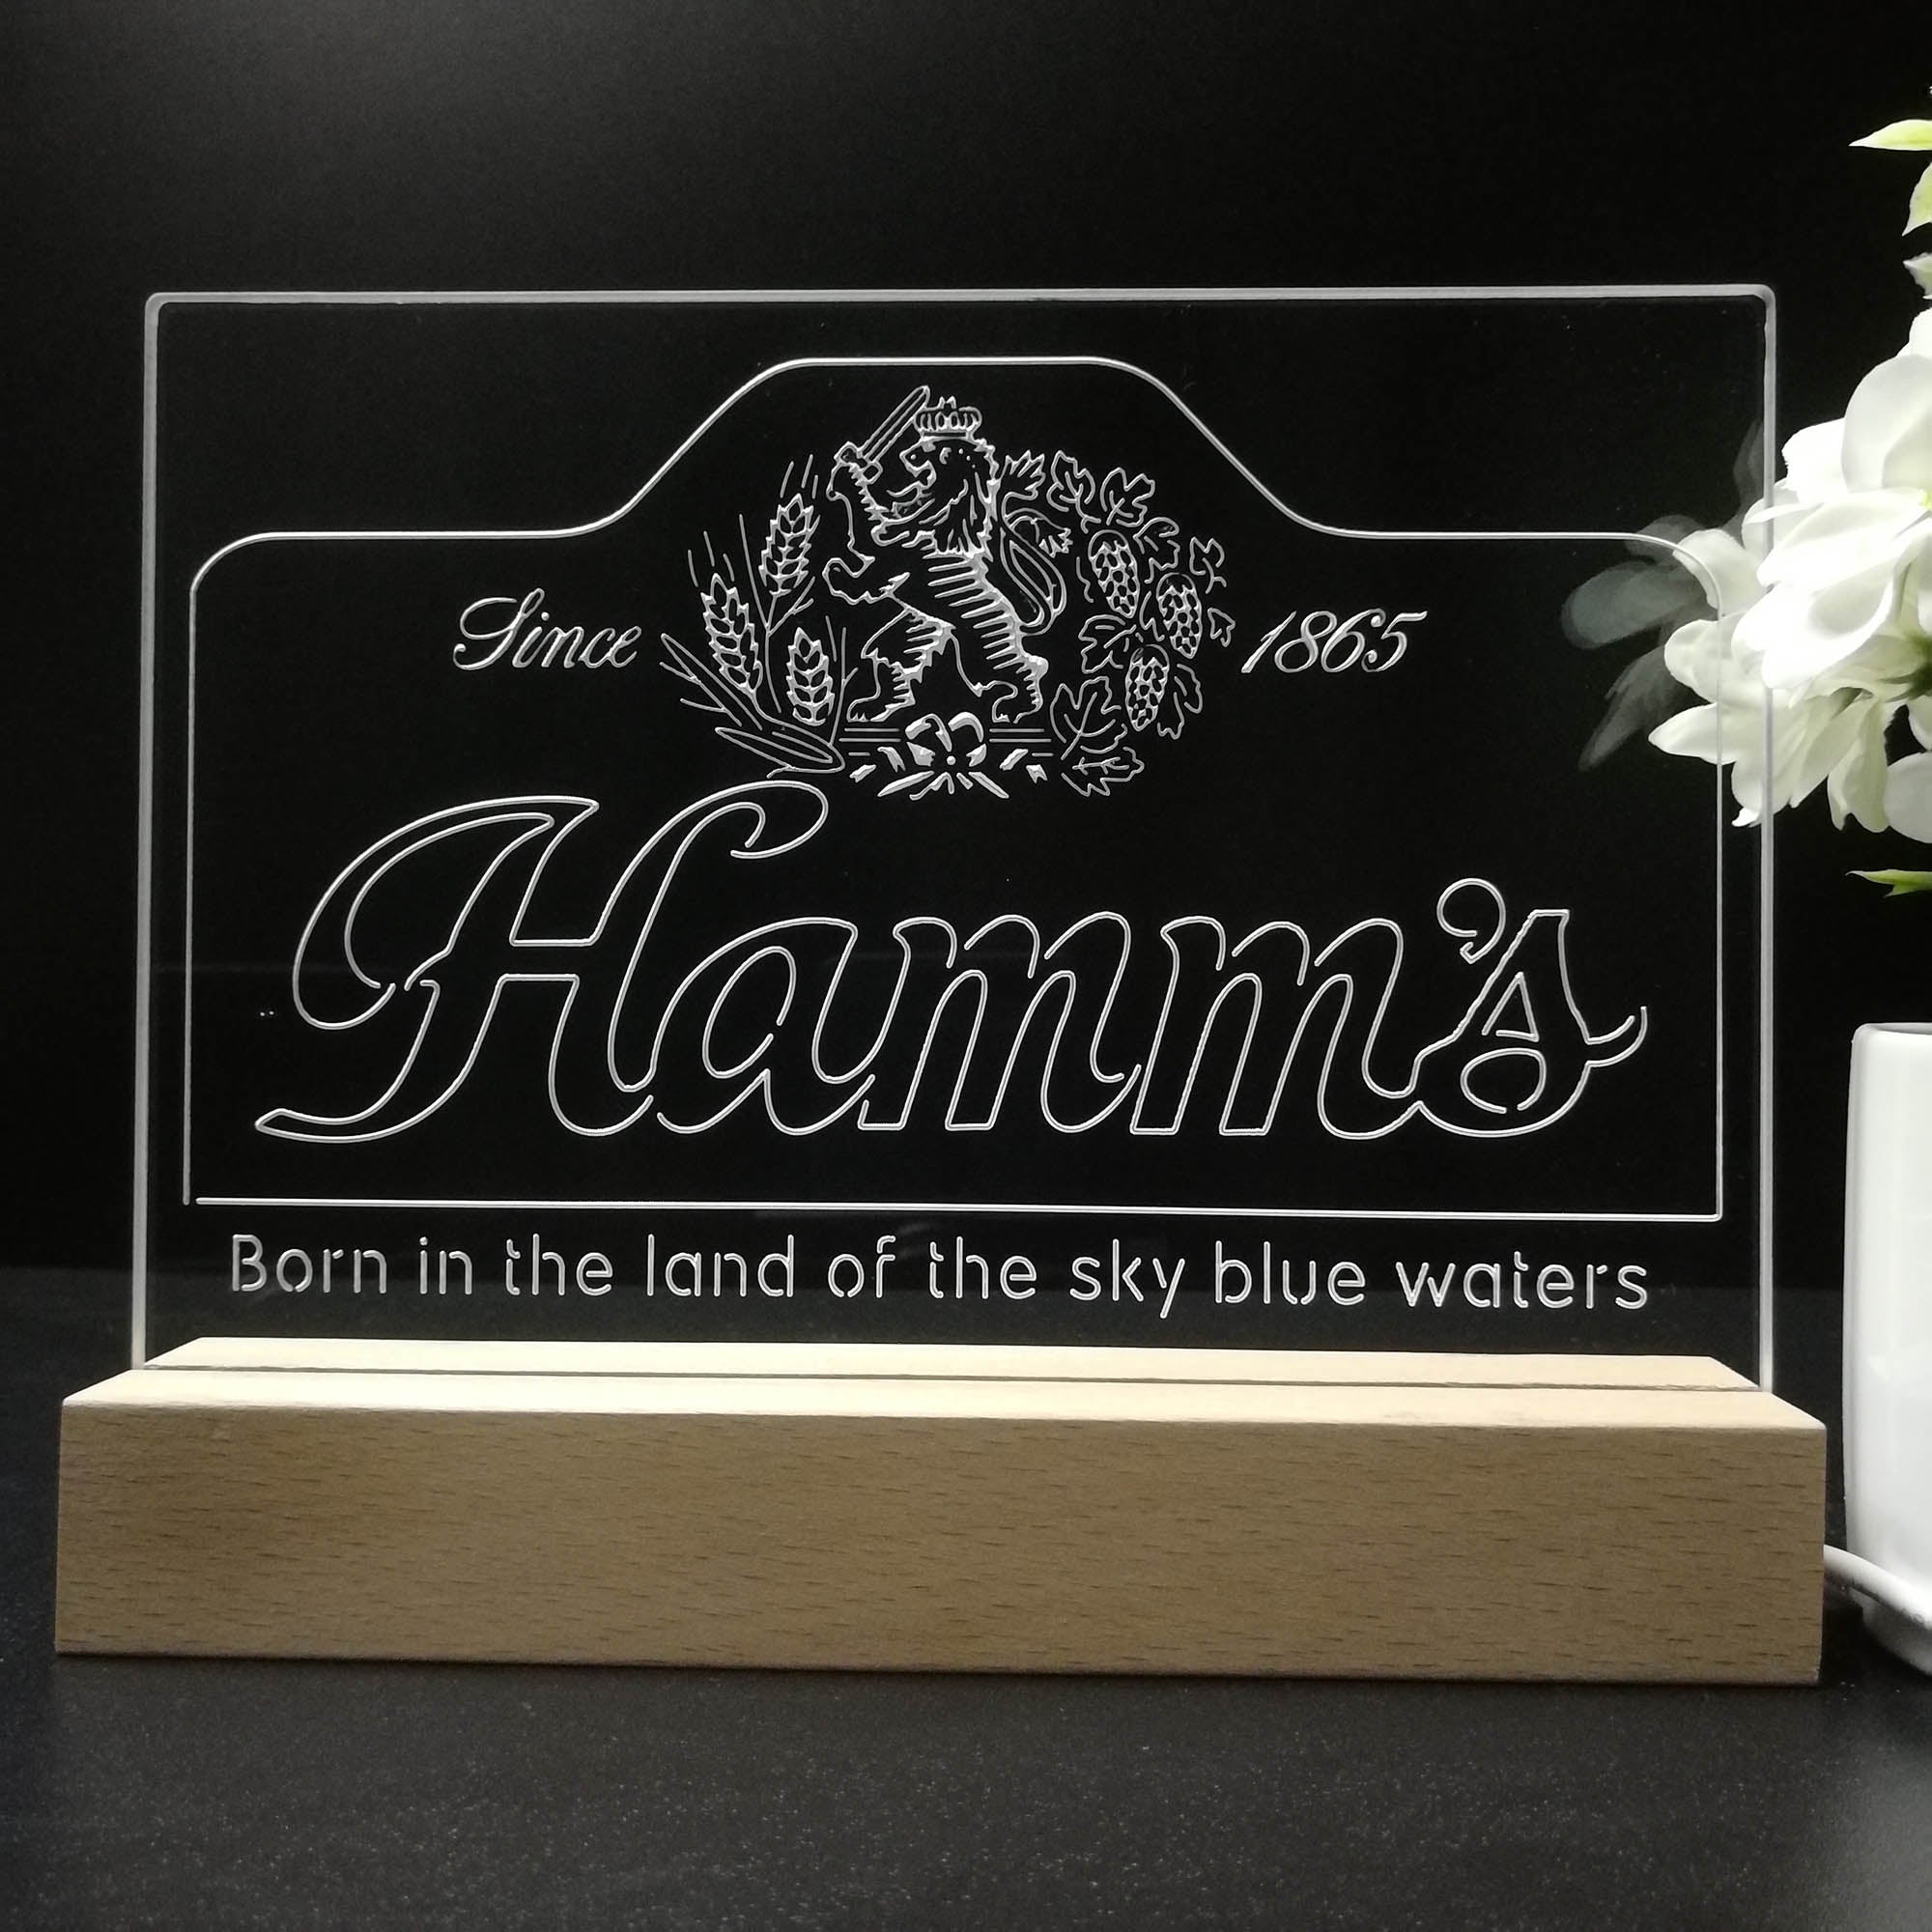 Hamm's Beer Since 1865 Night Light LED Sign